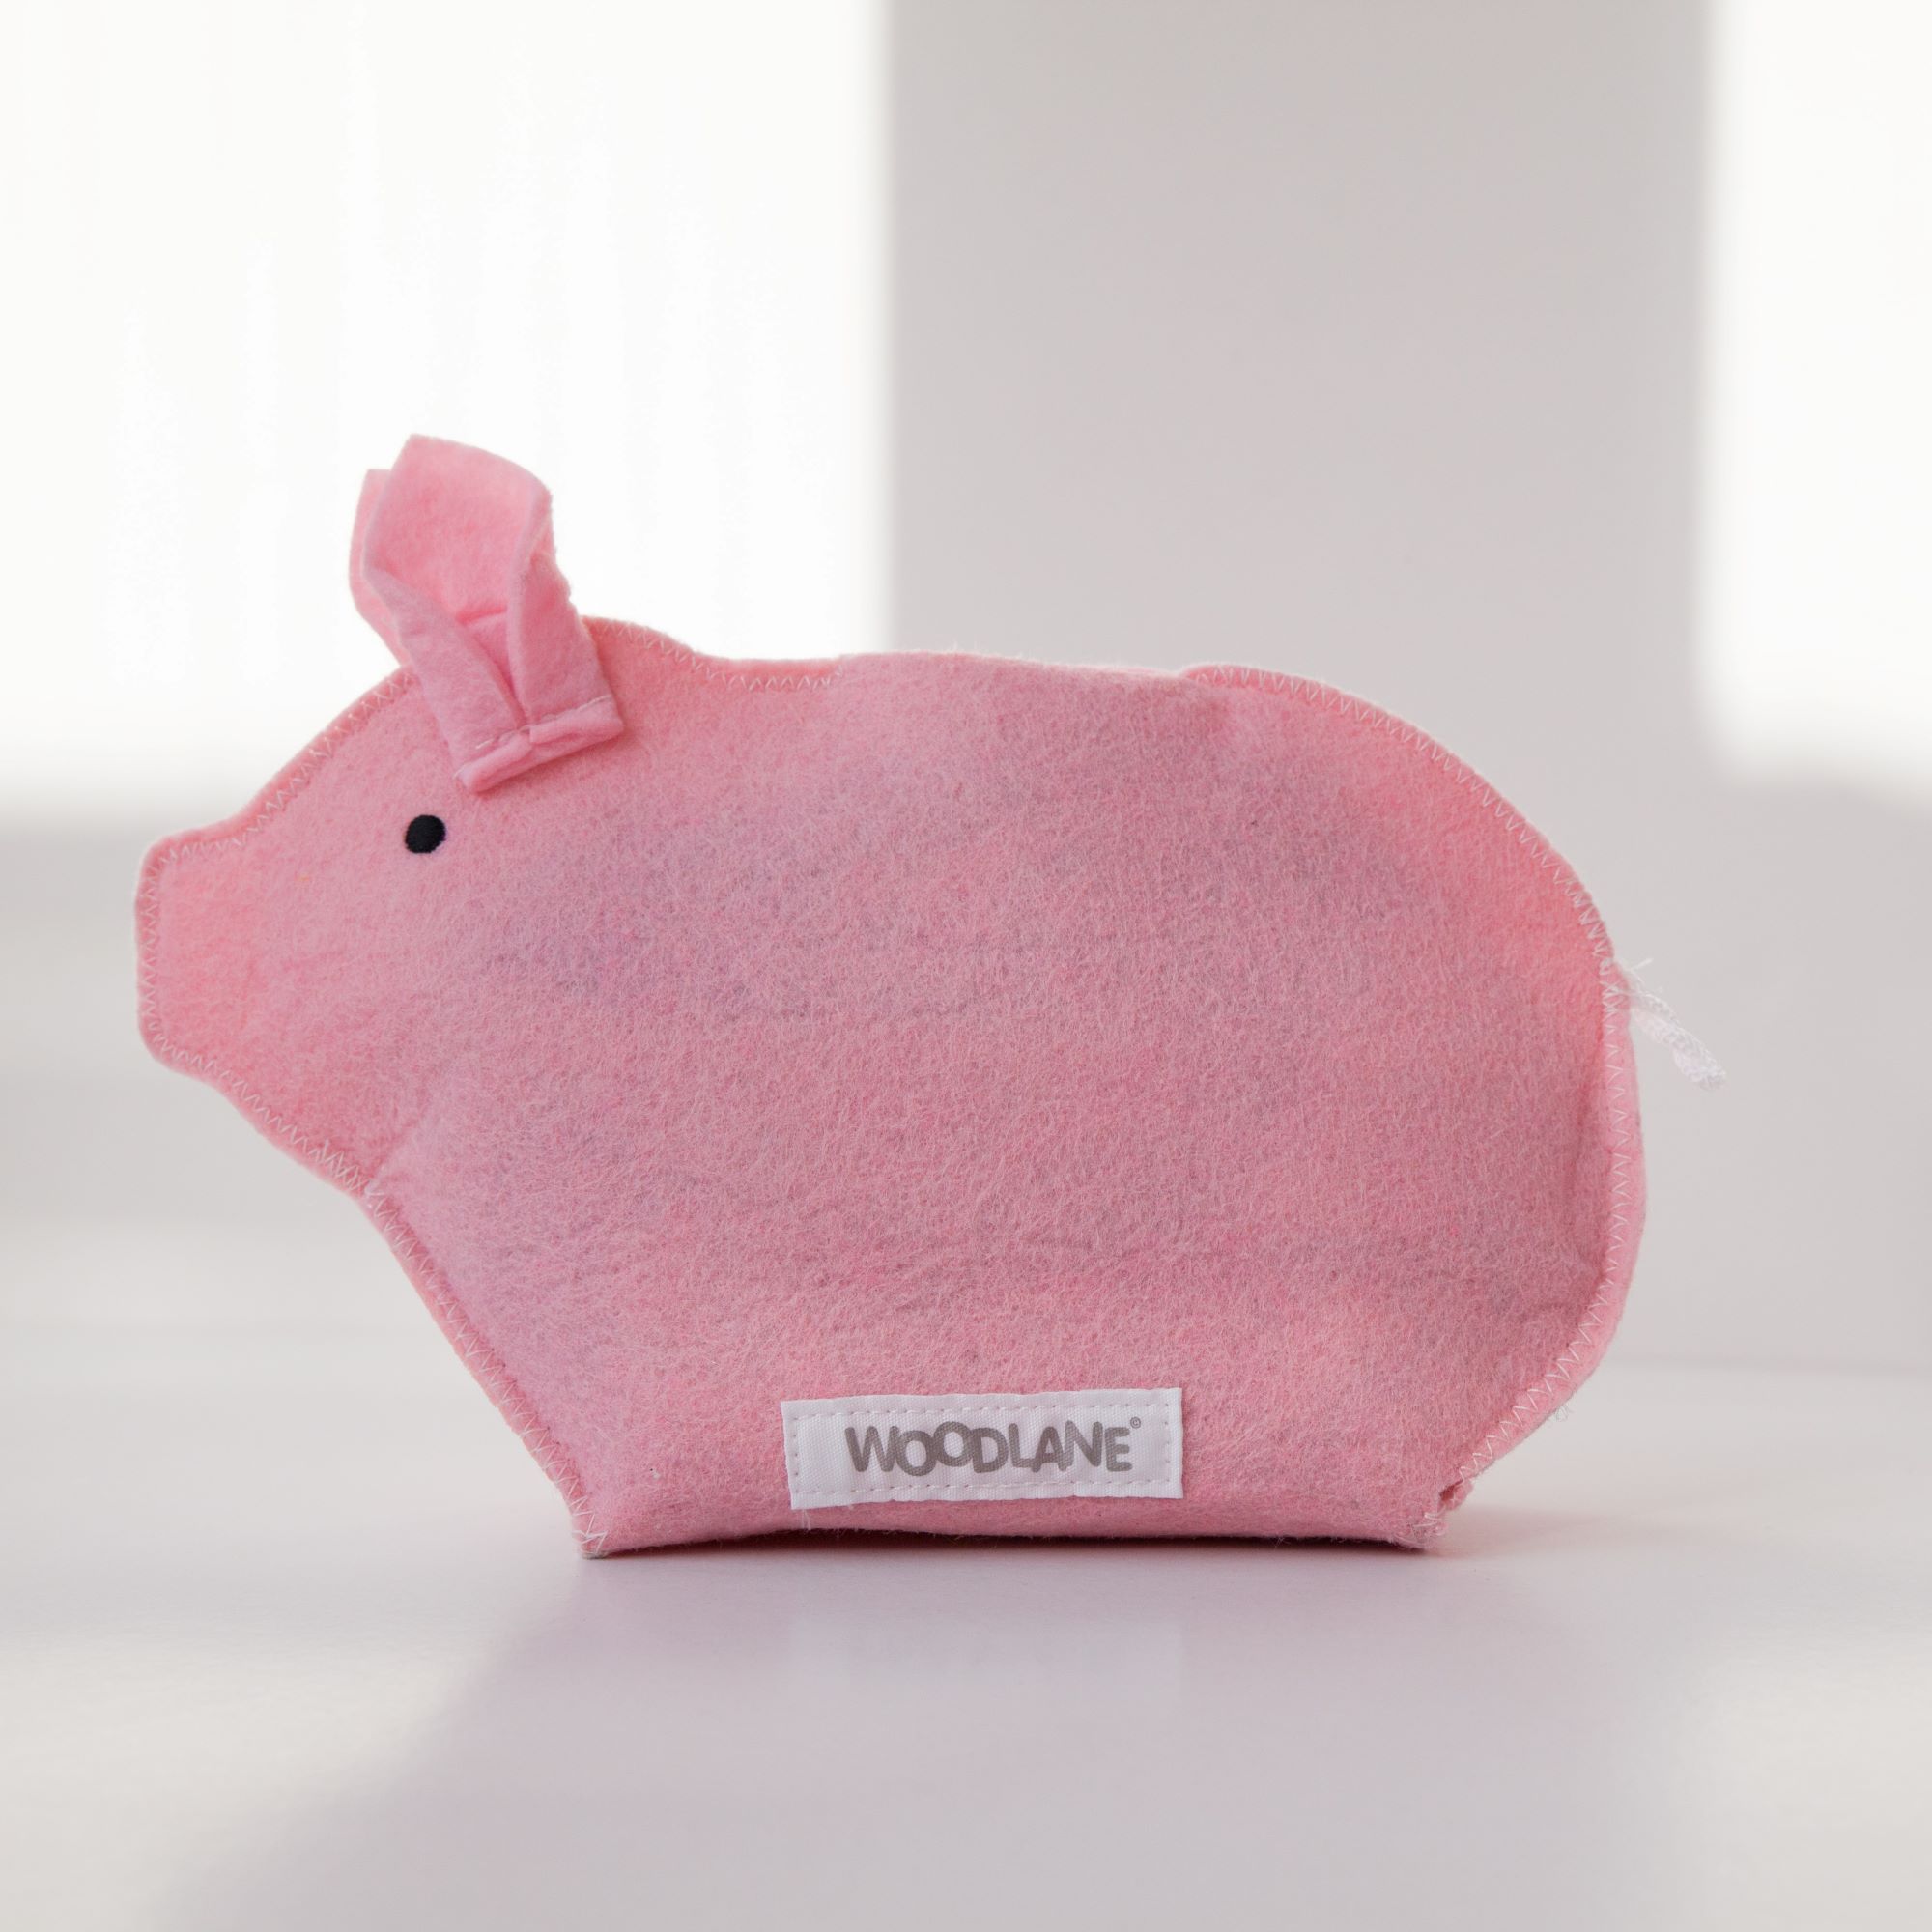 Woodlane Piggy-Frederique van Gemert -8856